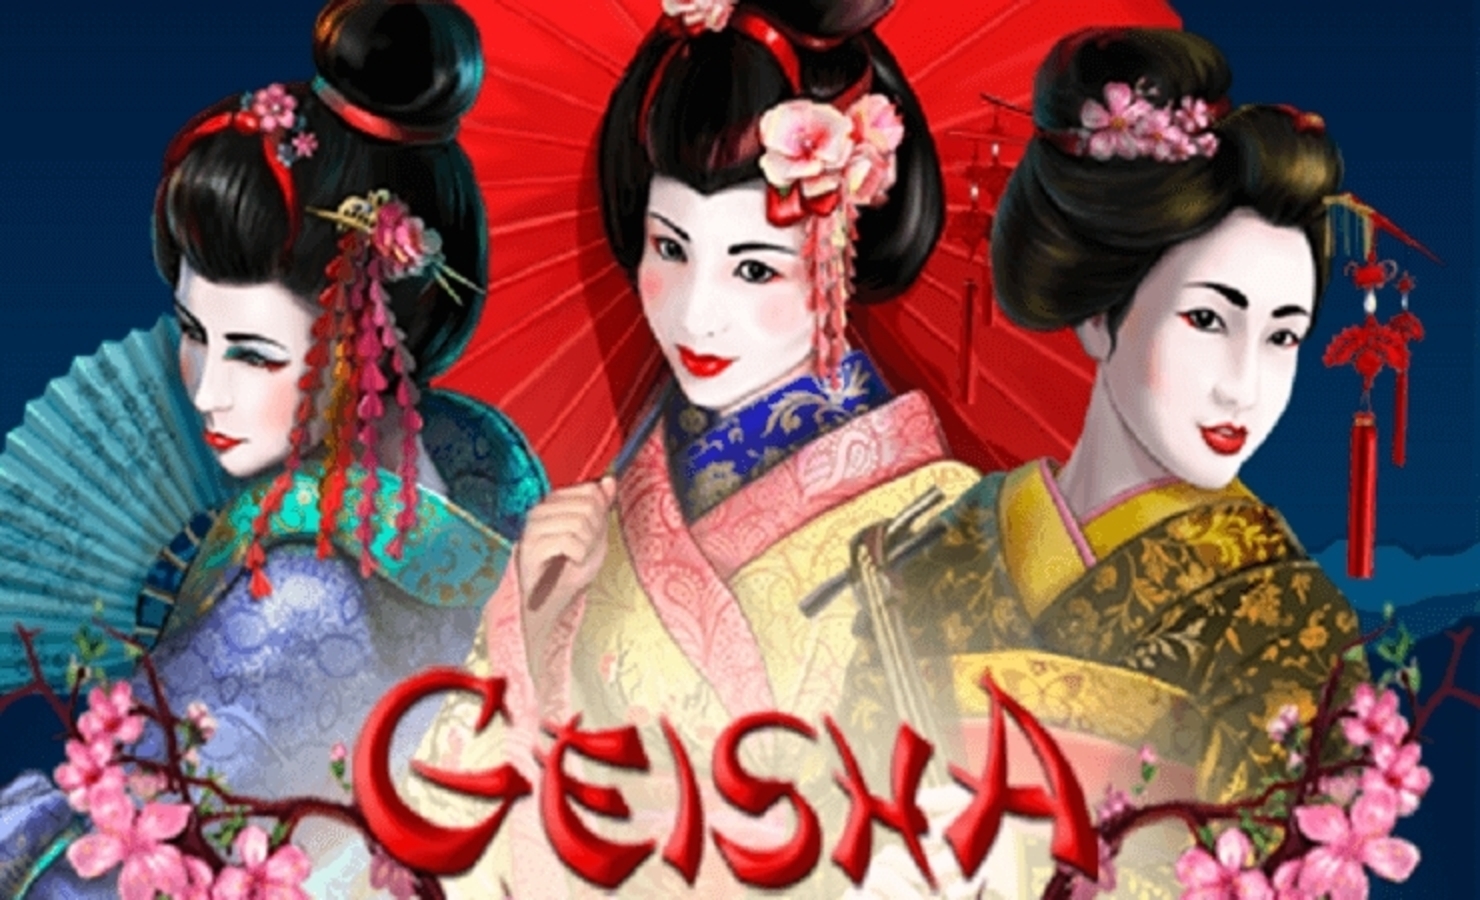 Geisha demo